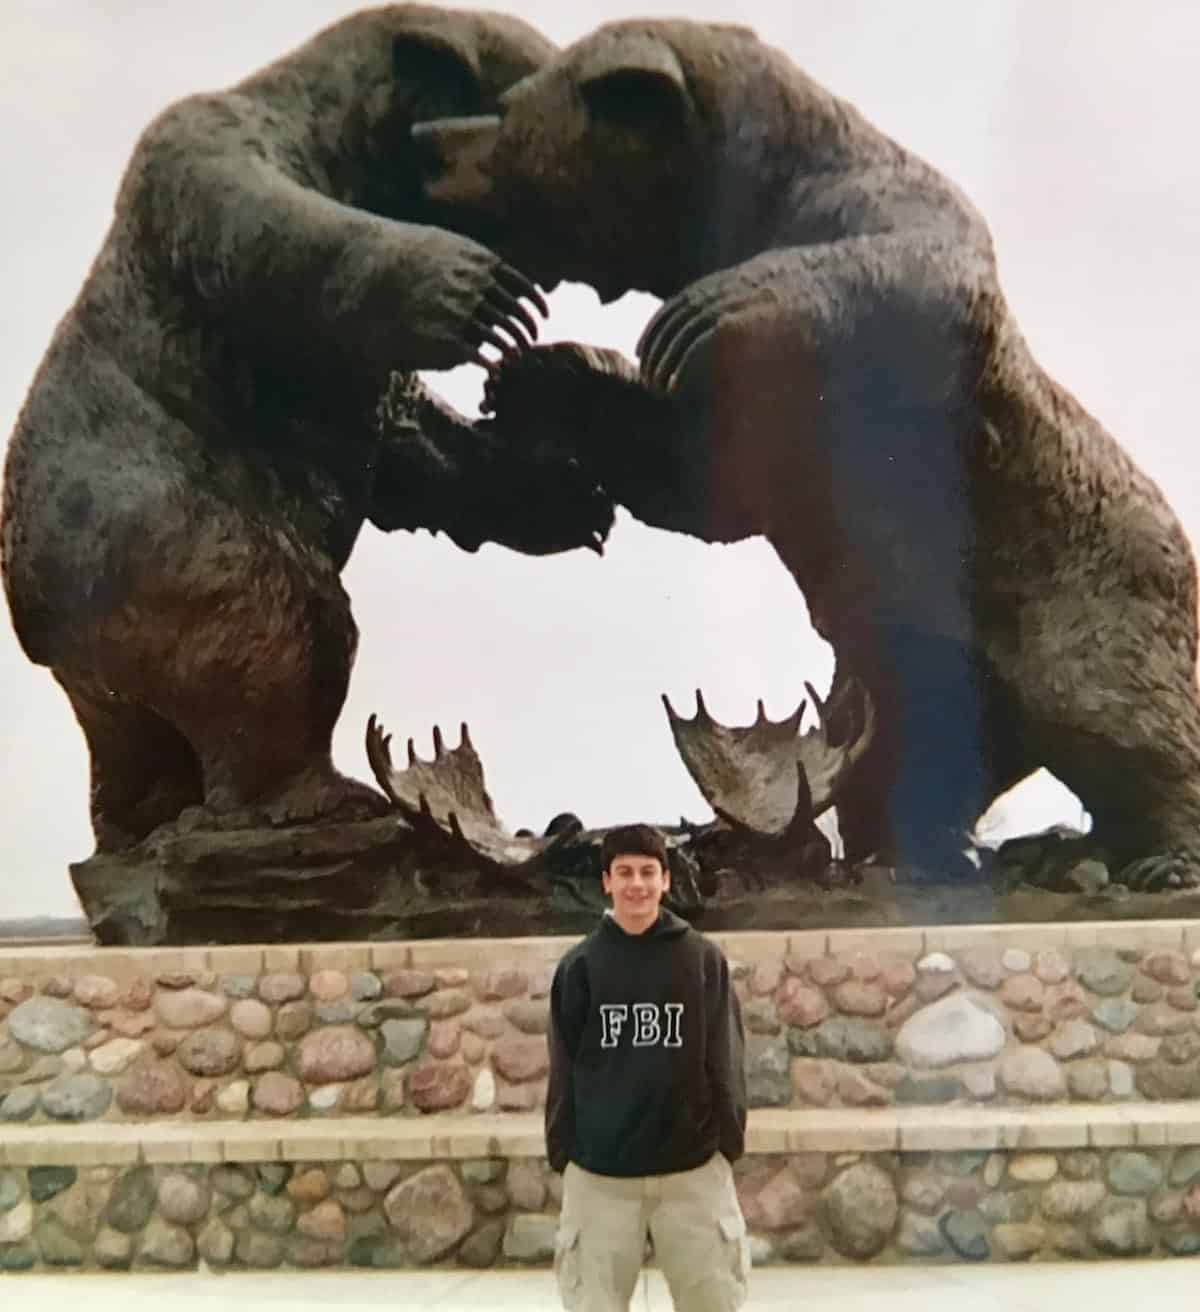 My son at bear sculpture.